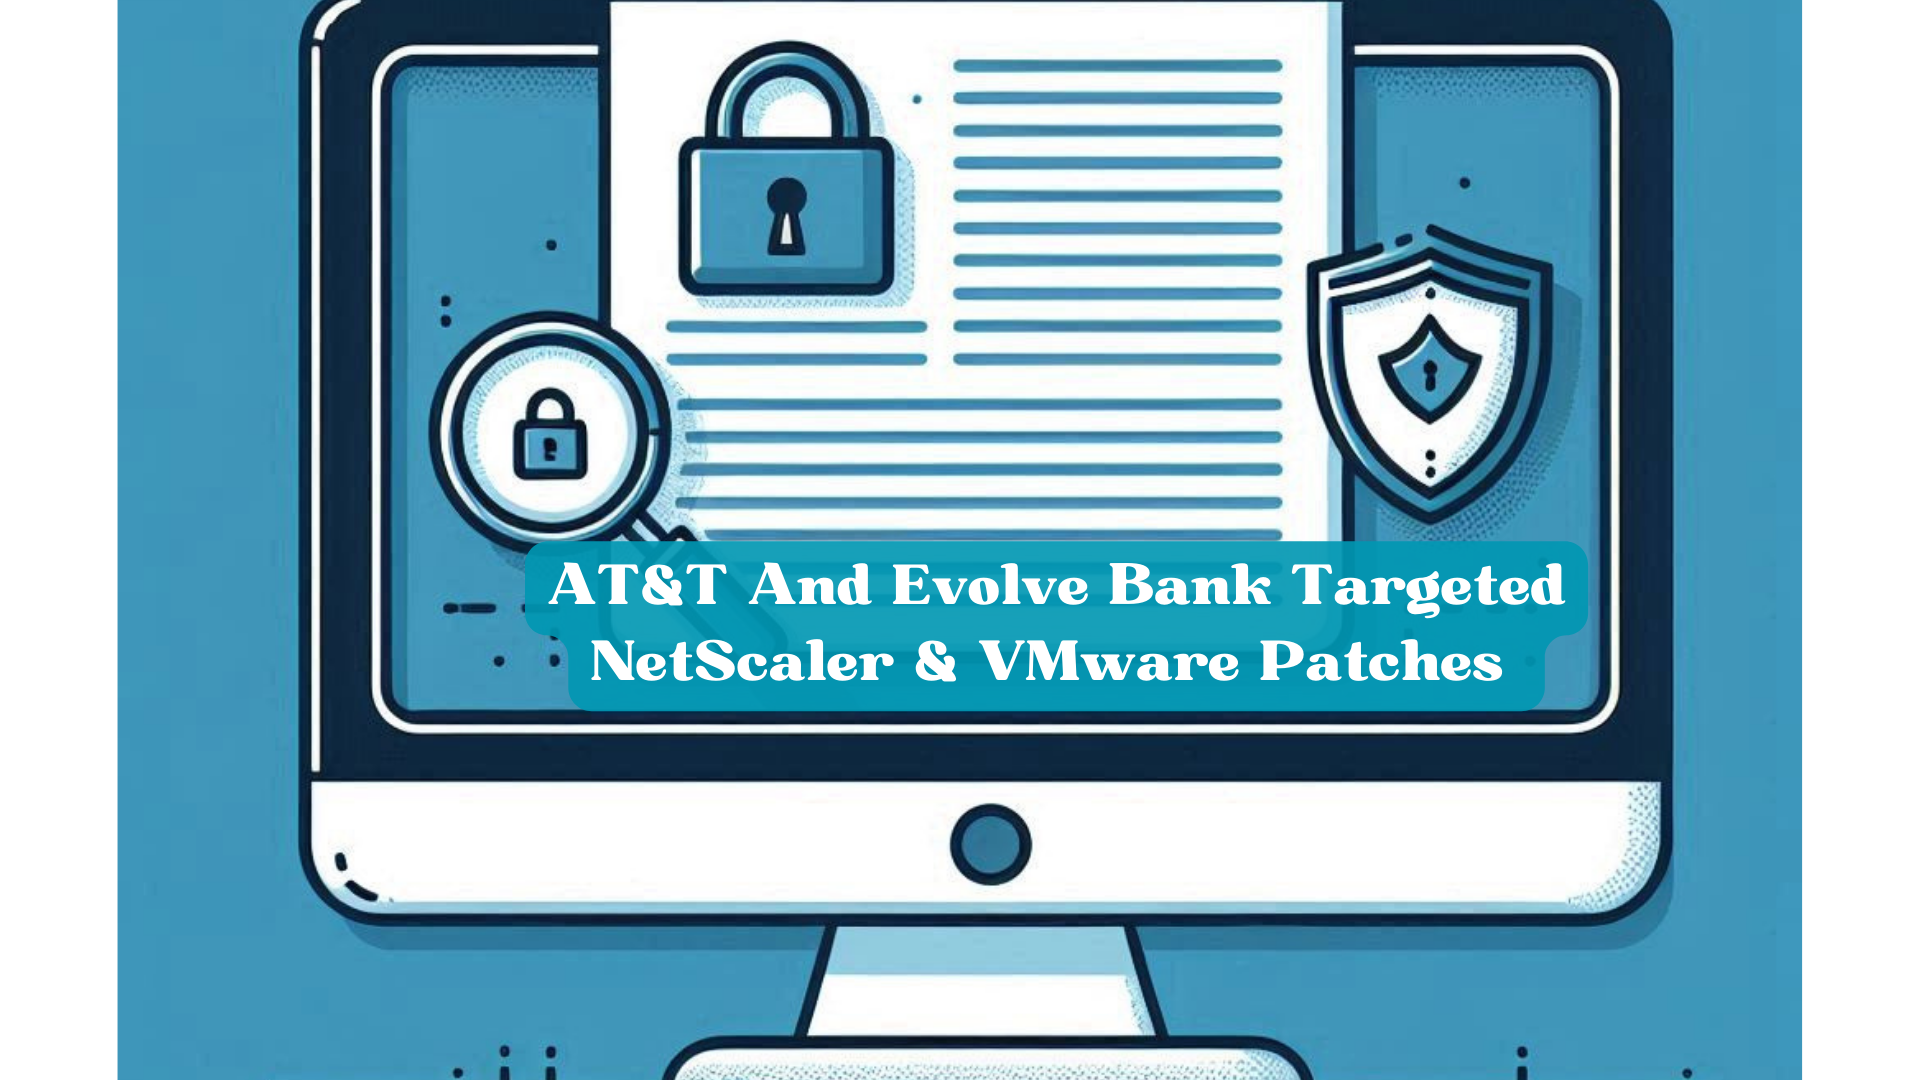 NetScaler & VMware Patches | Evolve Bank & Veeam Targeted